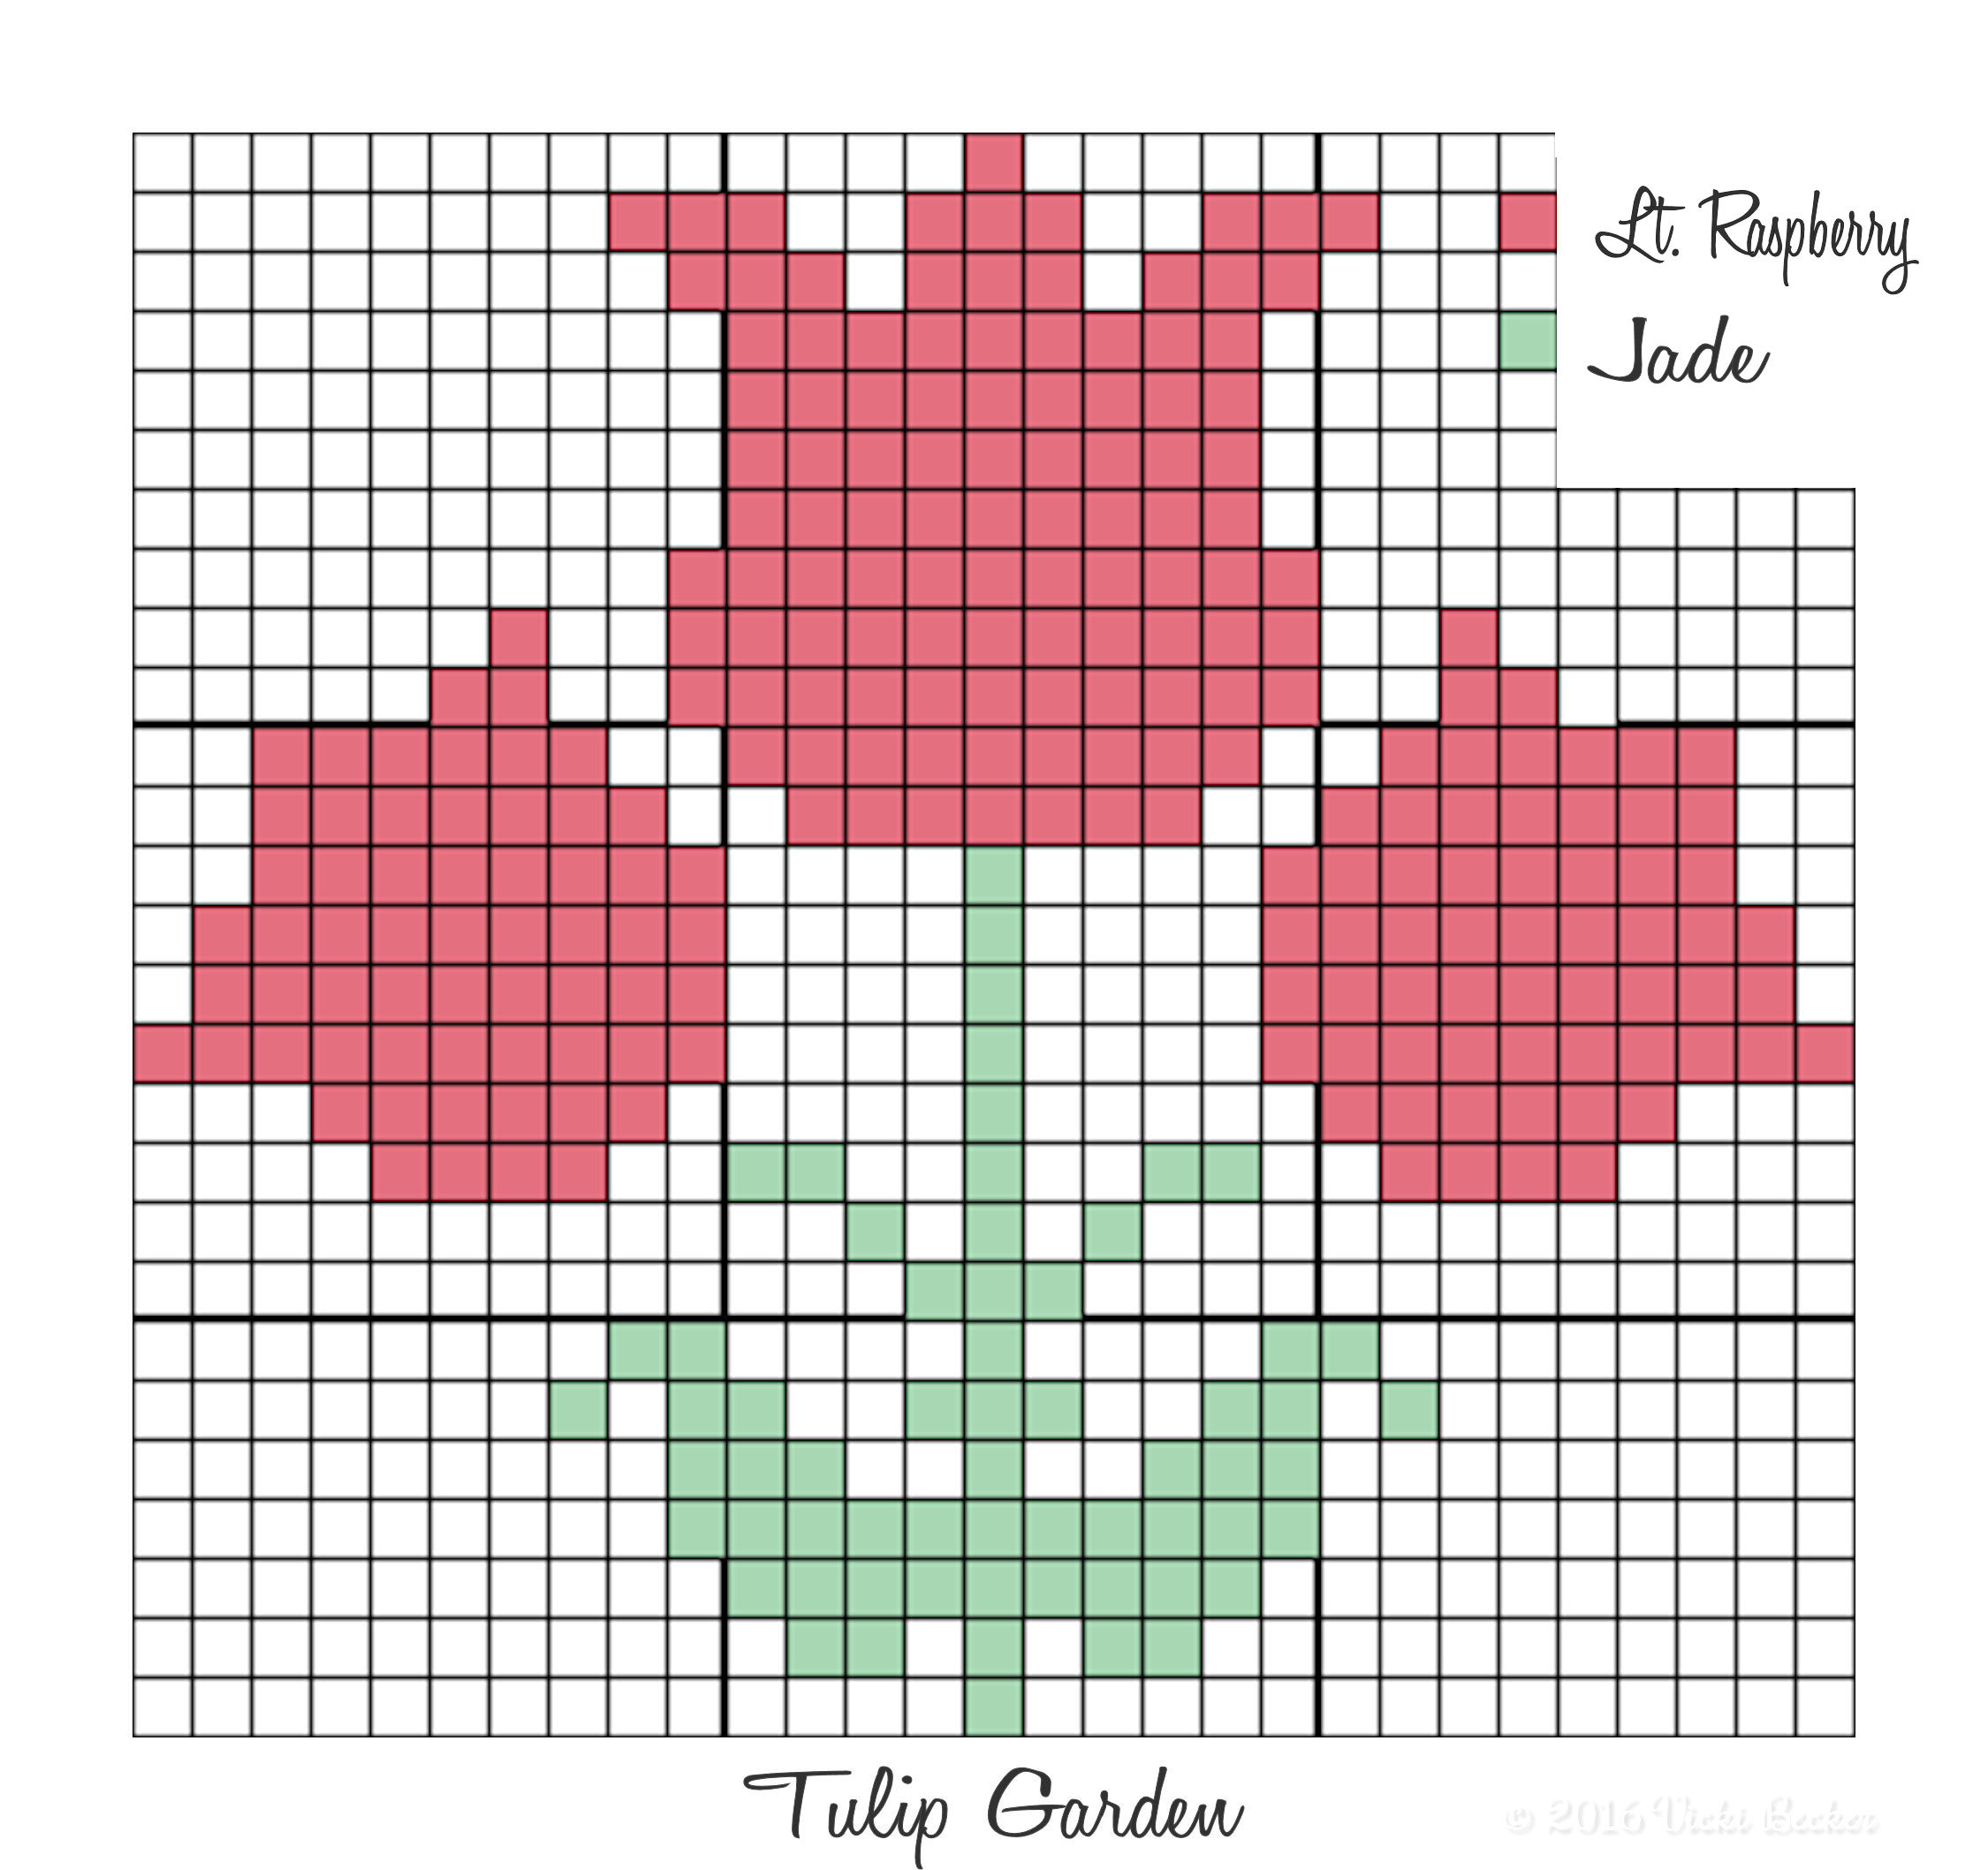 Tulip_Garden_Chart 2016